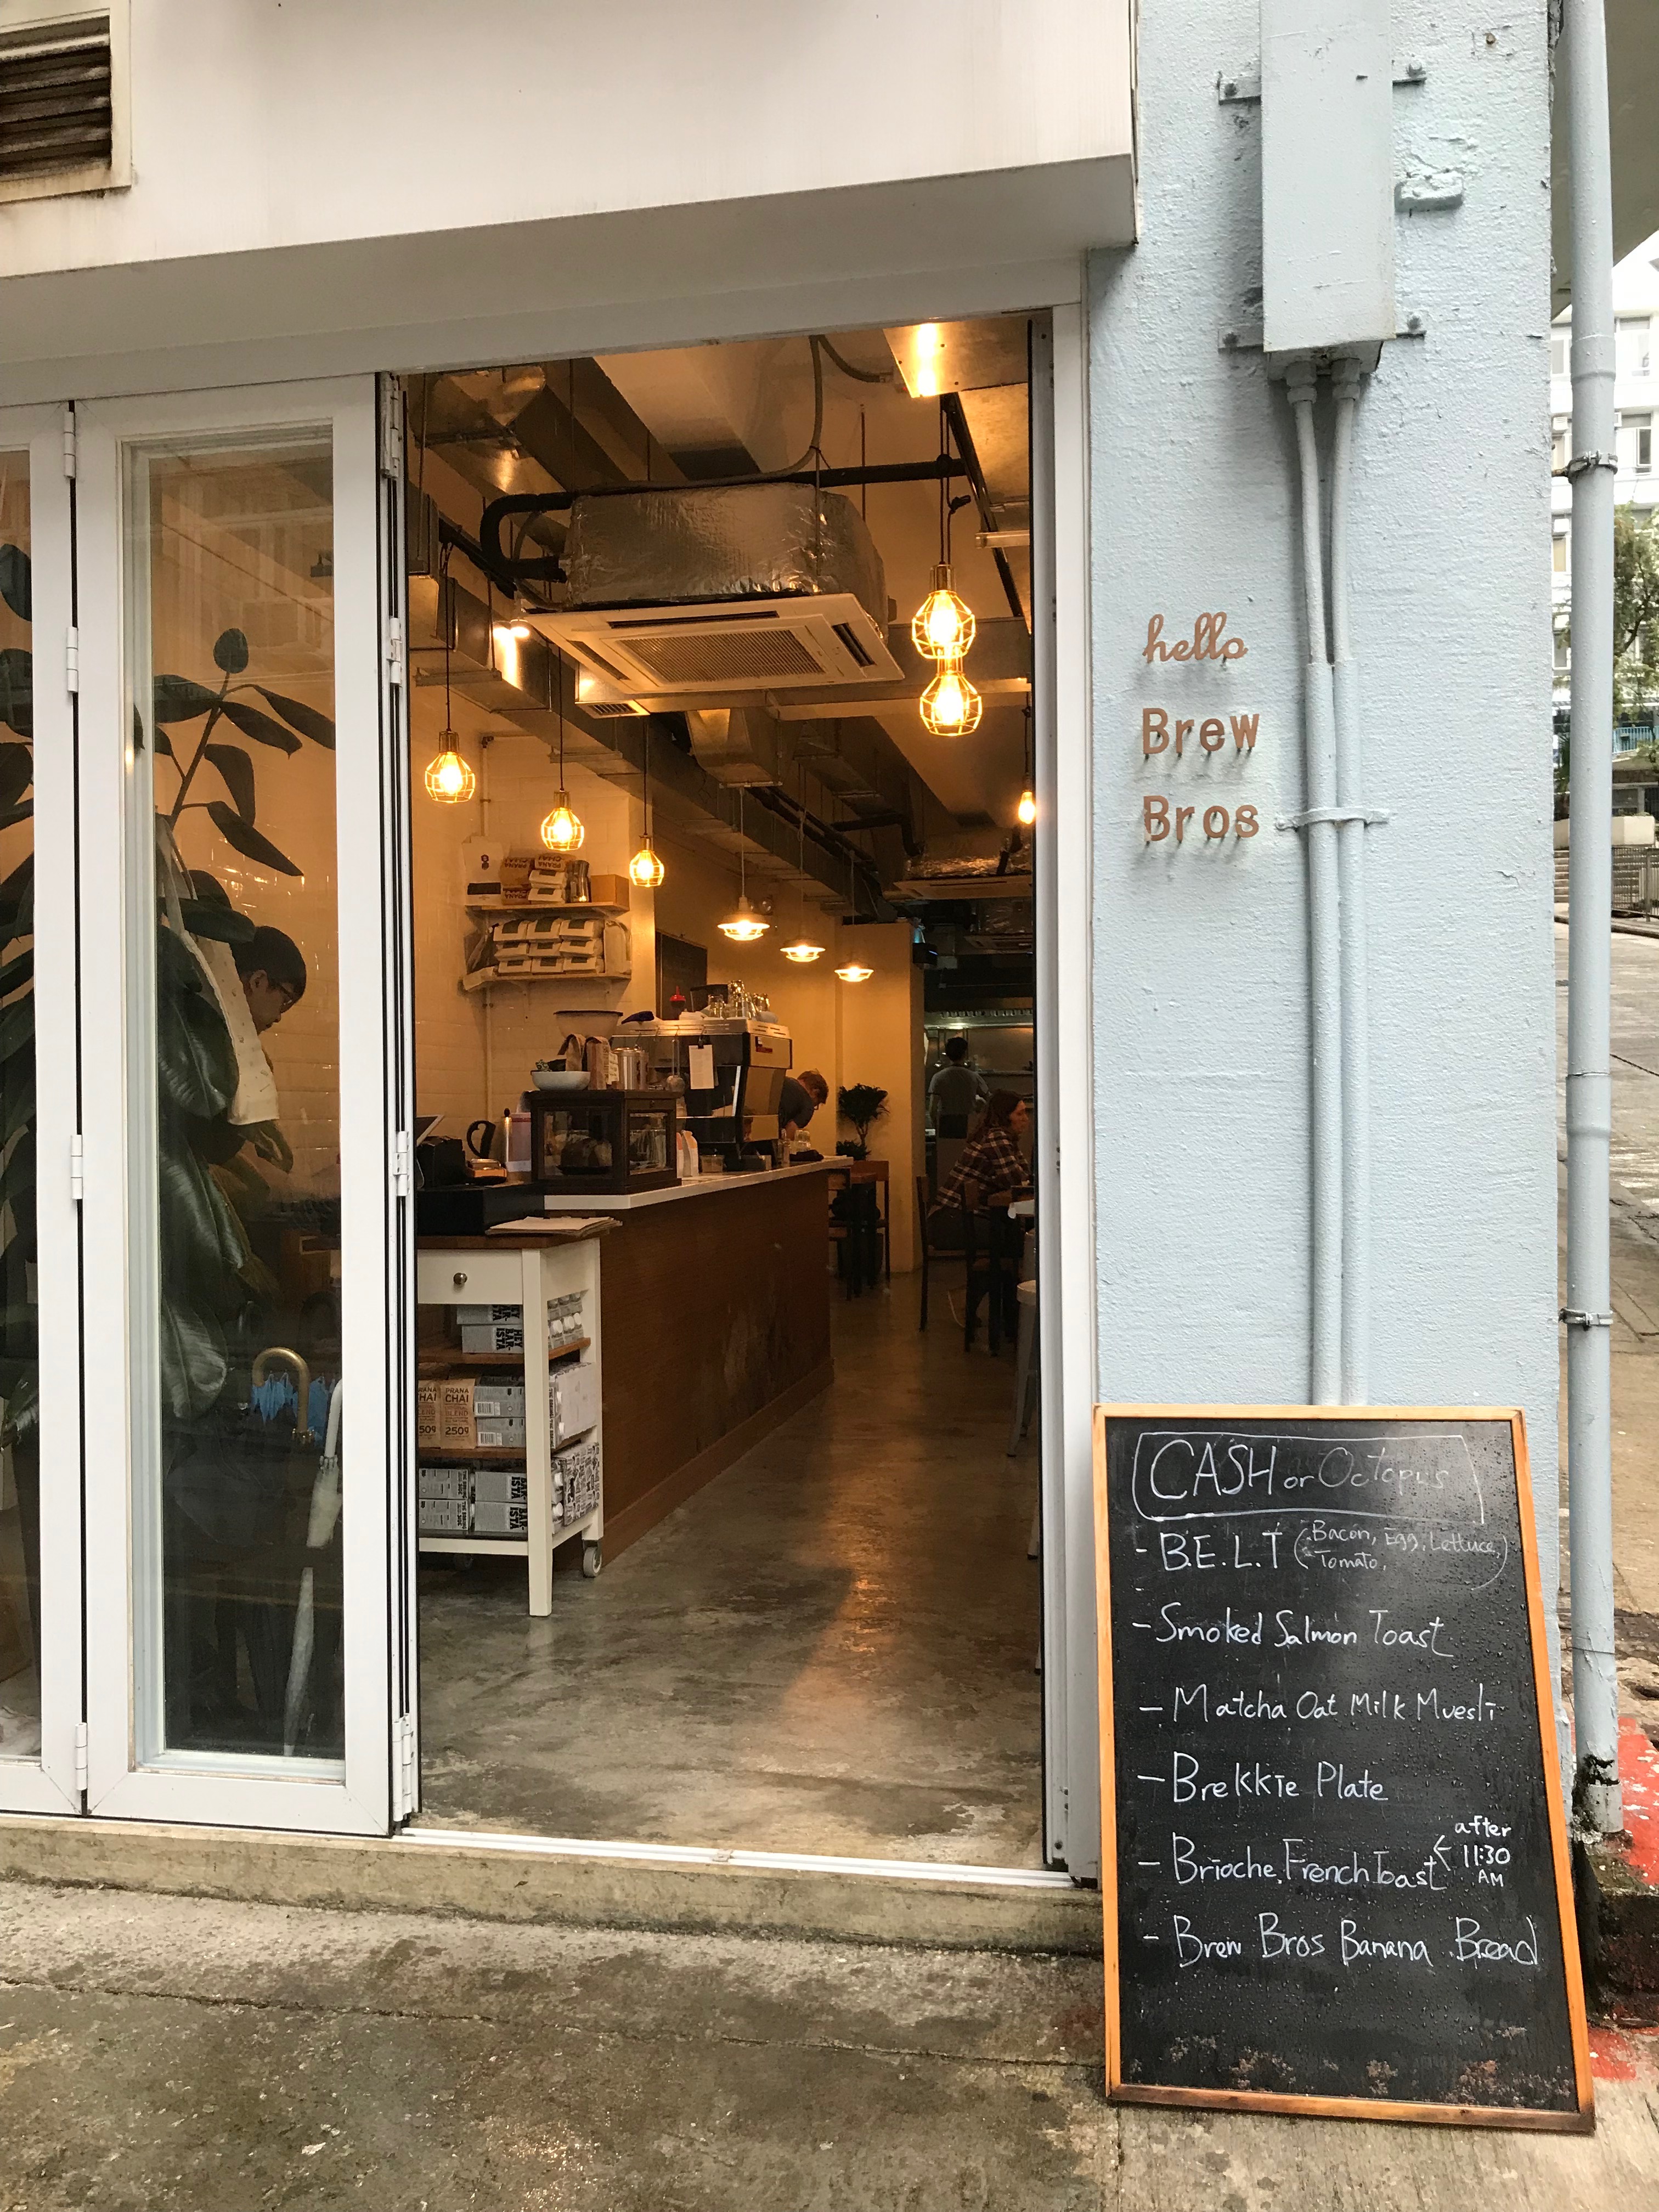 Hong Kong Cafe: Brew Bros Coffee (Part 3)